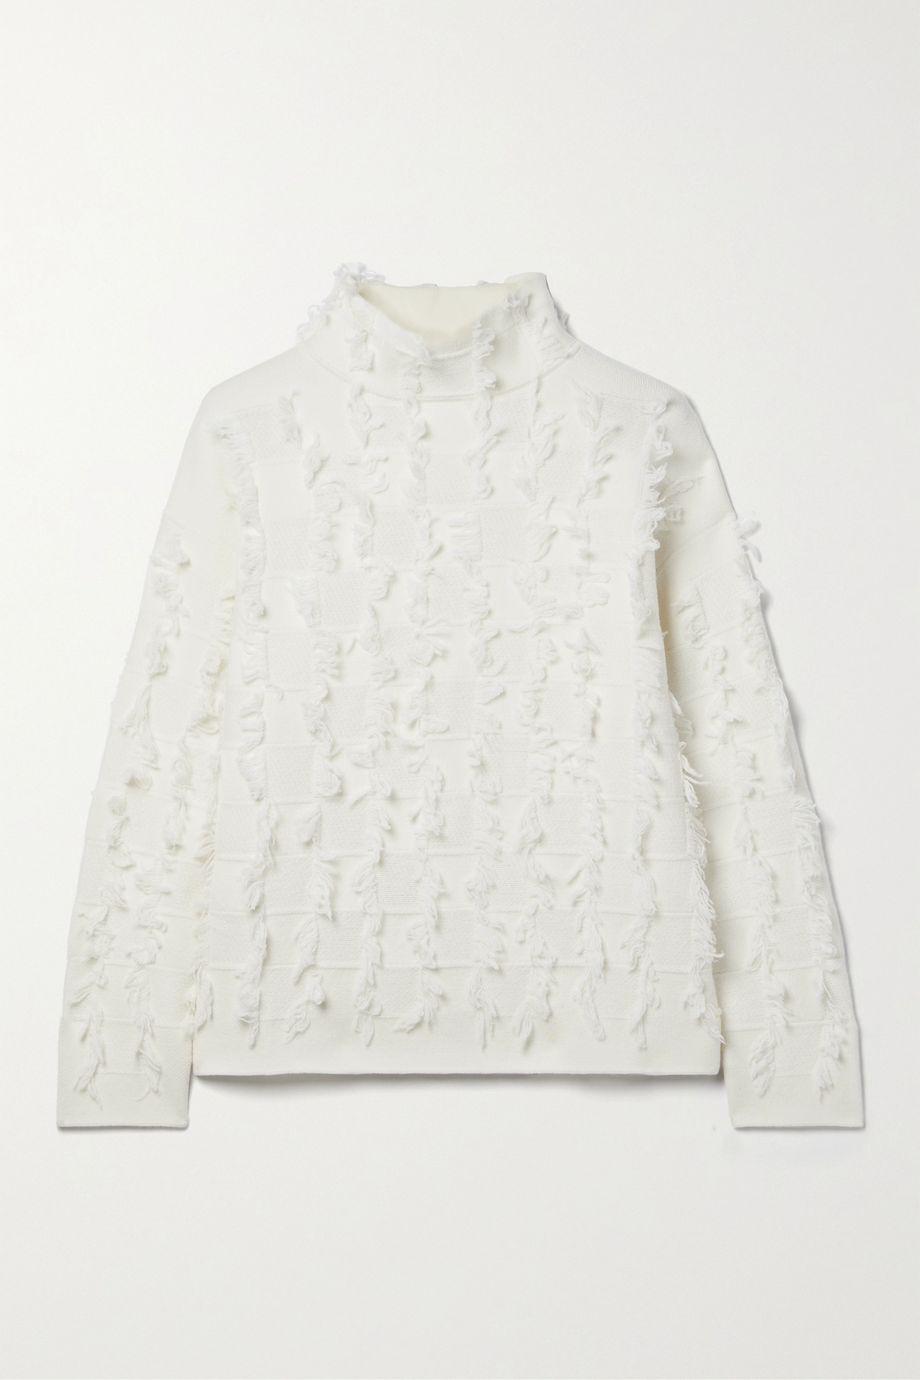 Fringed jacquard-knit cashmere turtleneck sweater by AKRIS